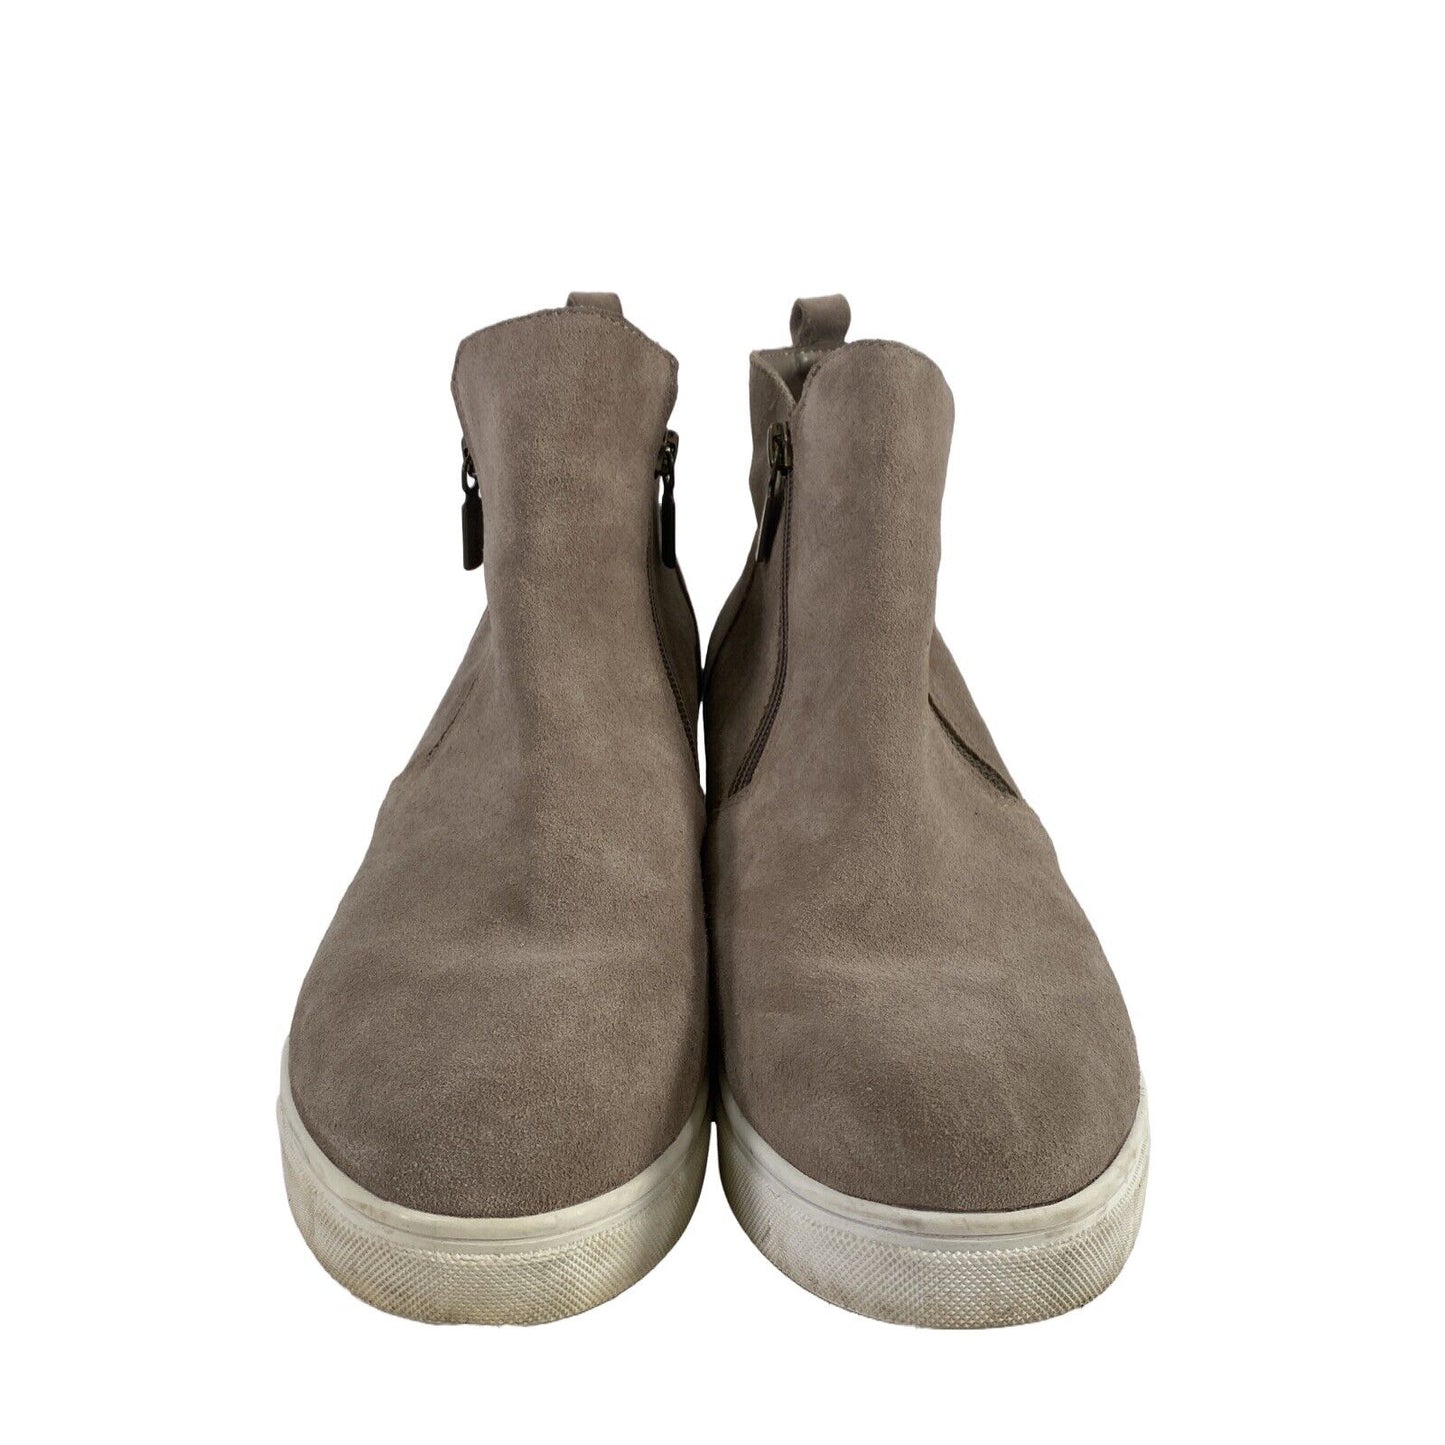 Blondo Women's Gray Suede Empeigne Cuir Waterproof Sneaker Boot - 9.5 M